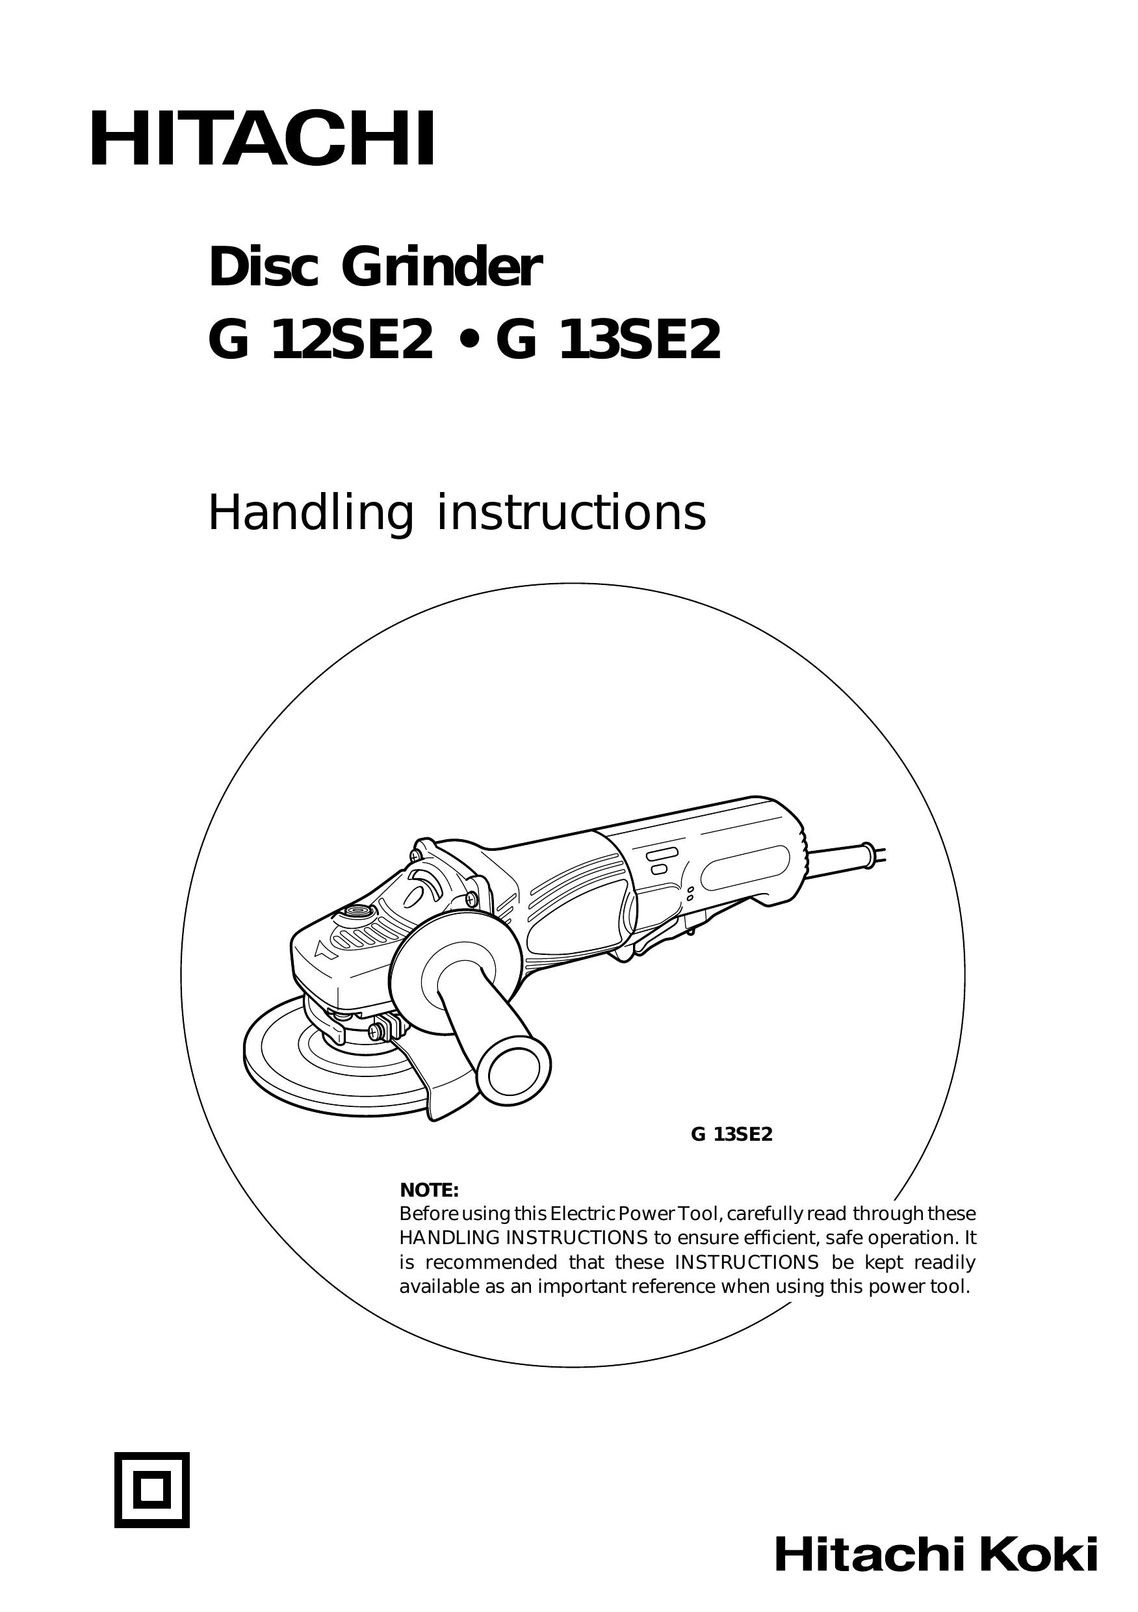 Hitachi Koki USA G 13SE2 Grinder User Manual